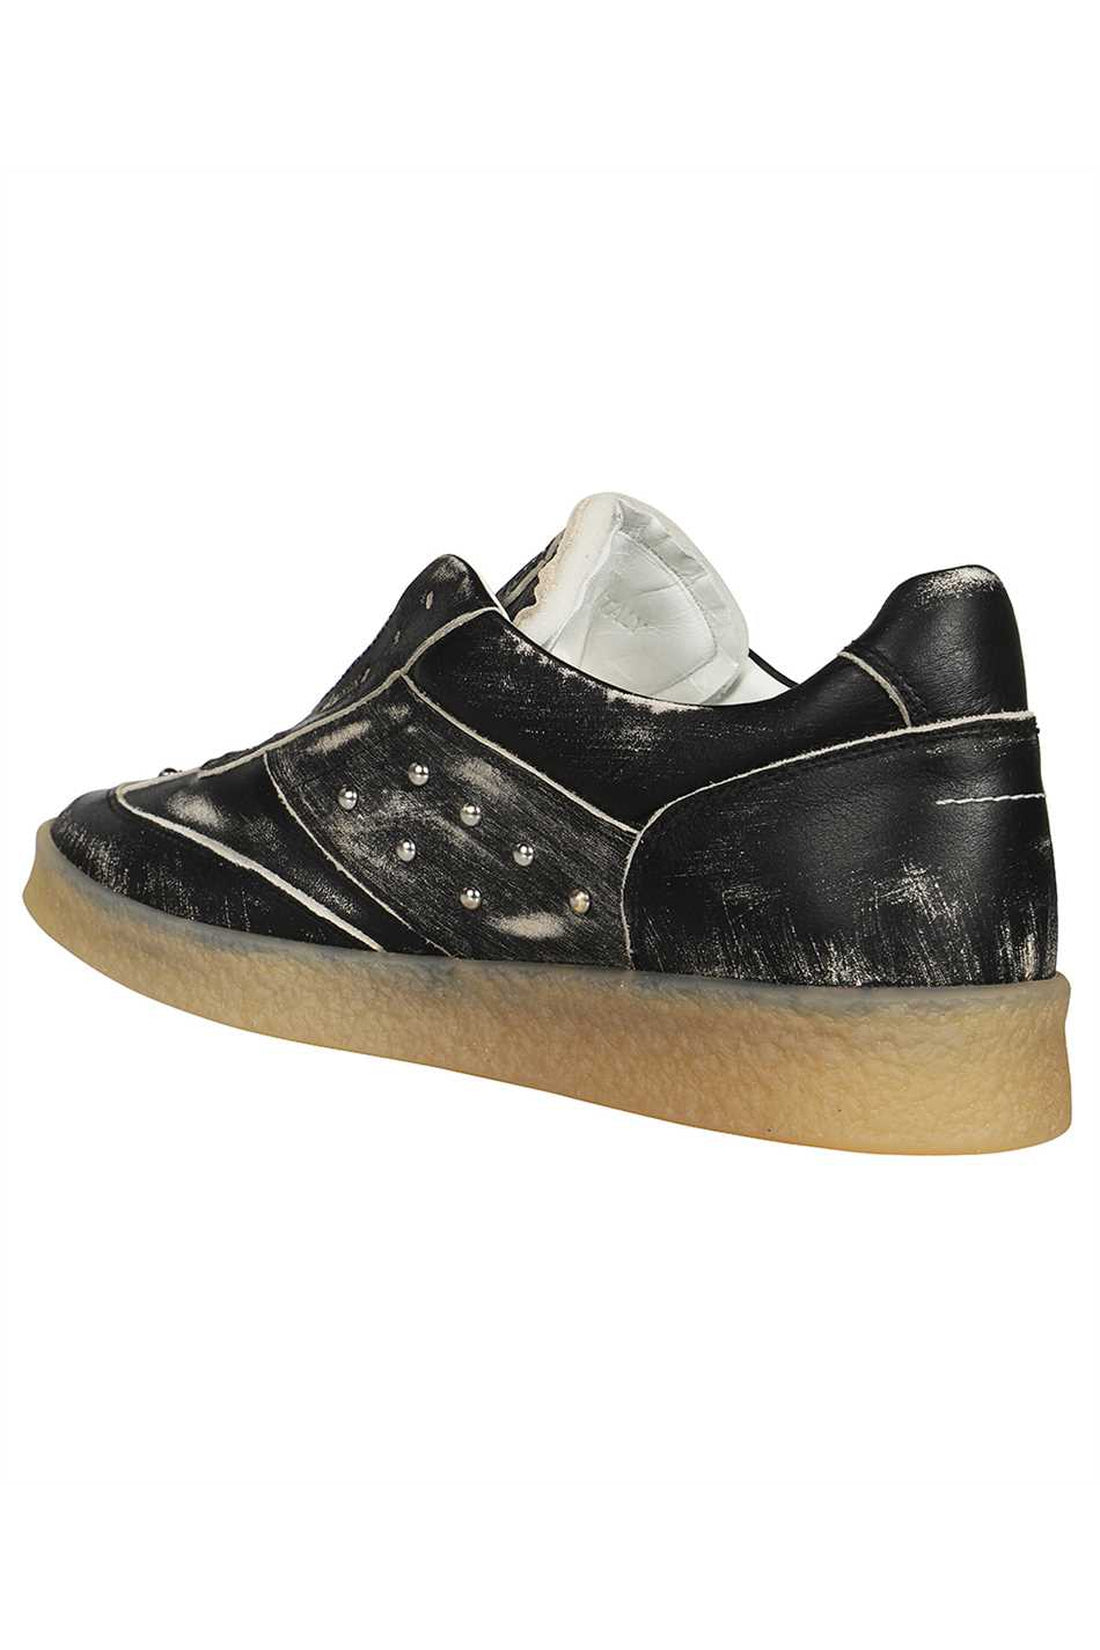 MM6 Maison Margiela-OUTLET-SALE-Leather low-top sneakers-ARCHIVIST